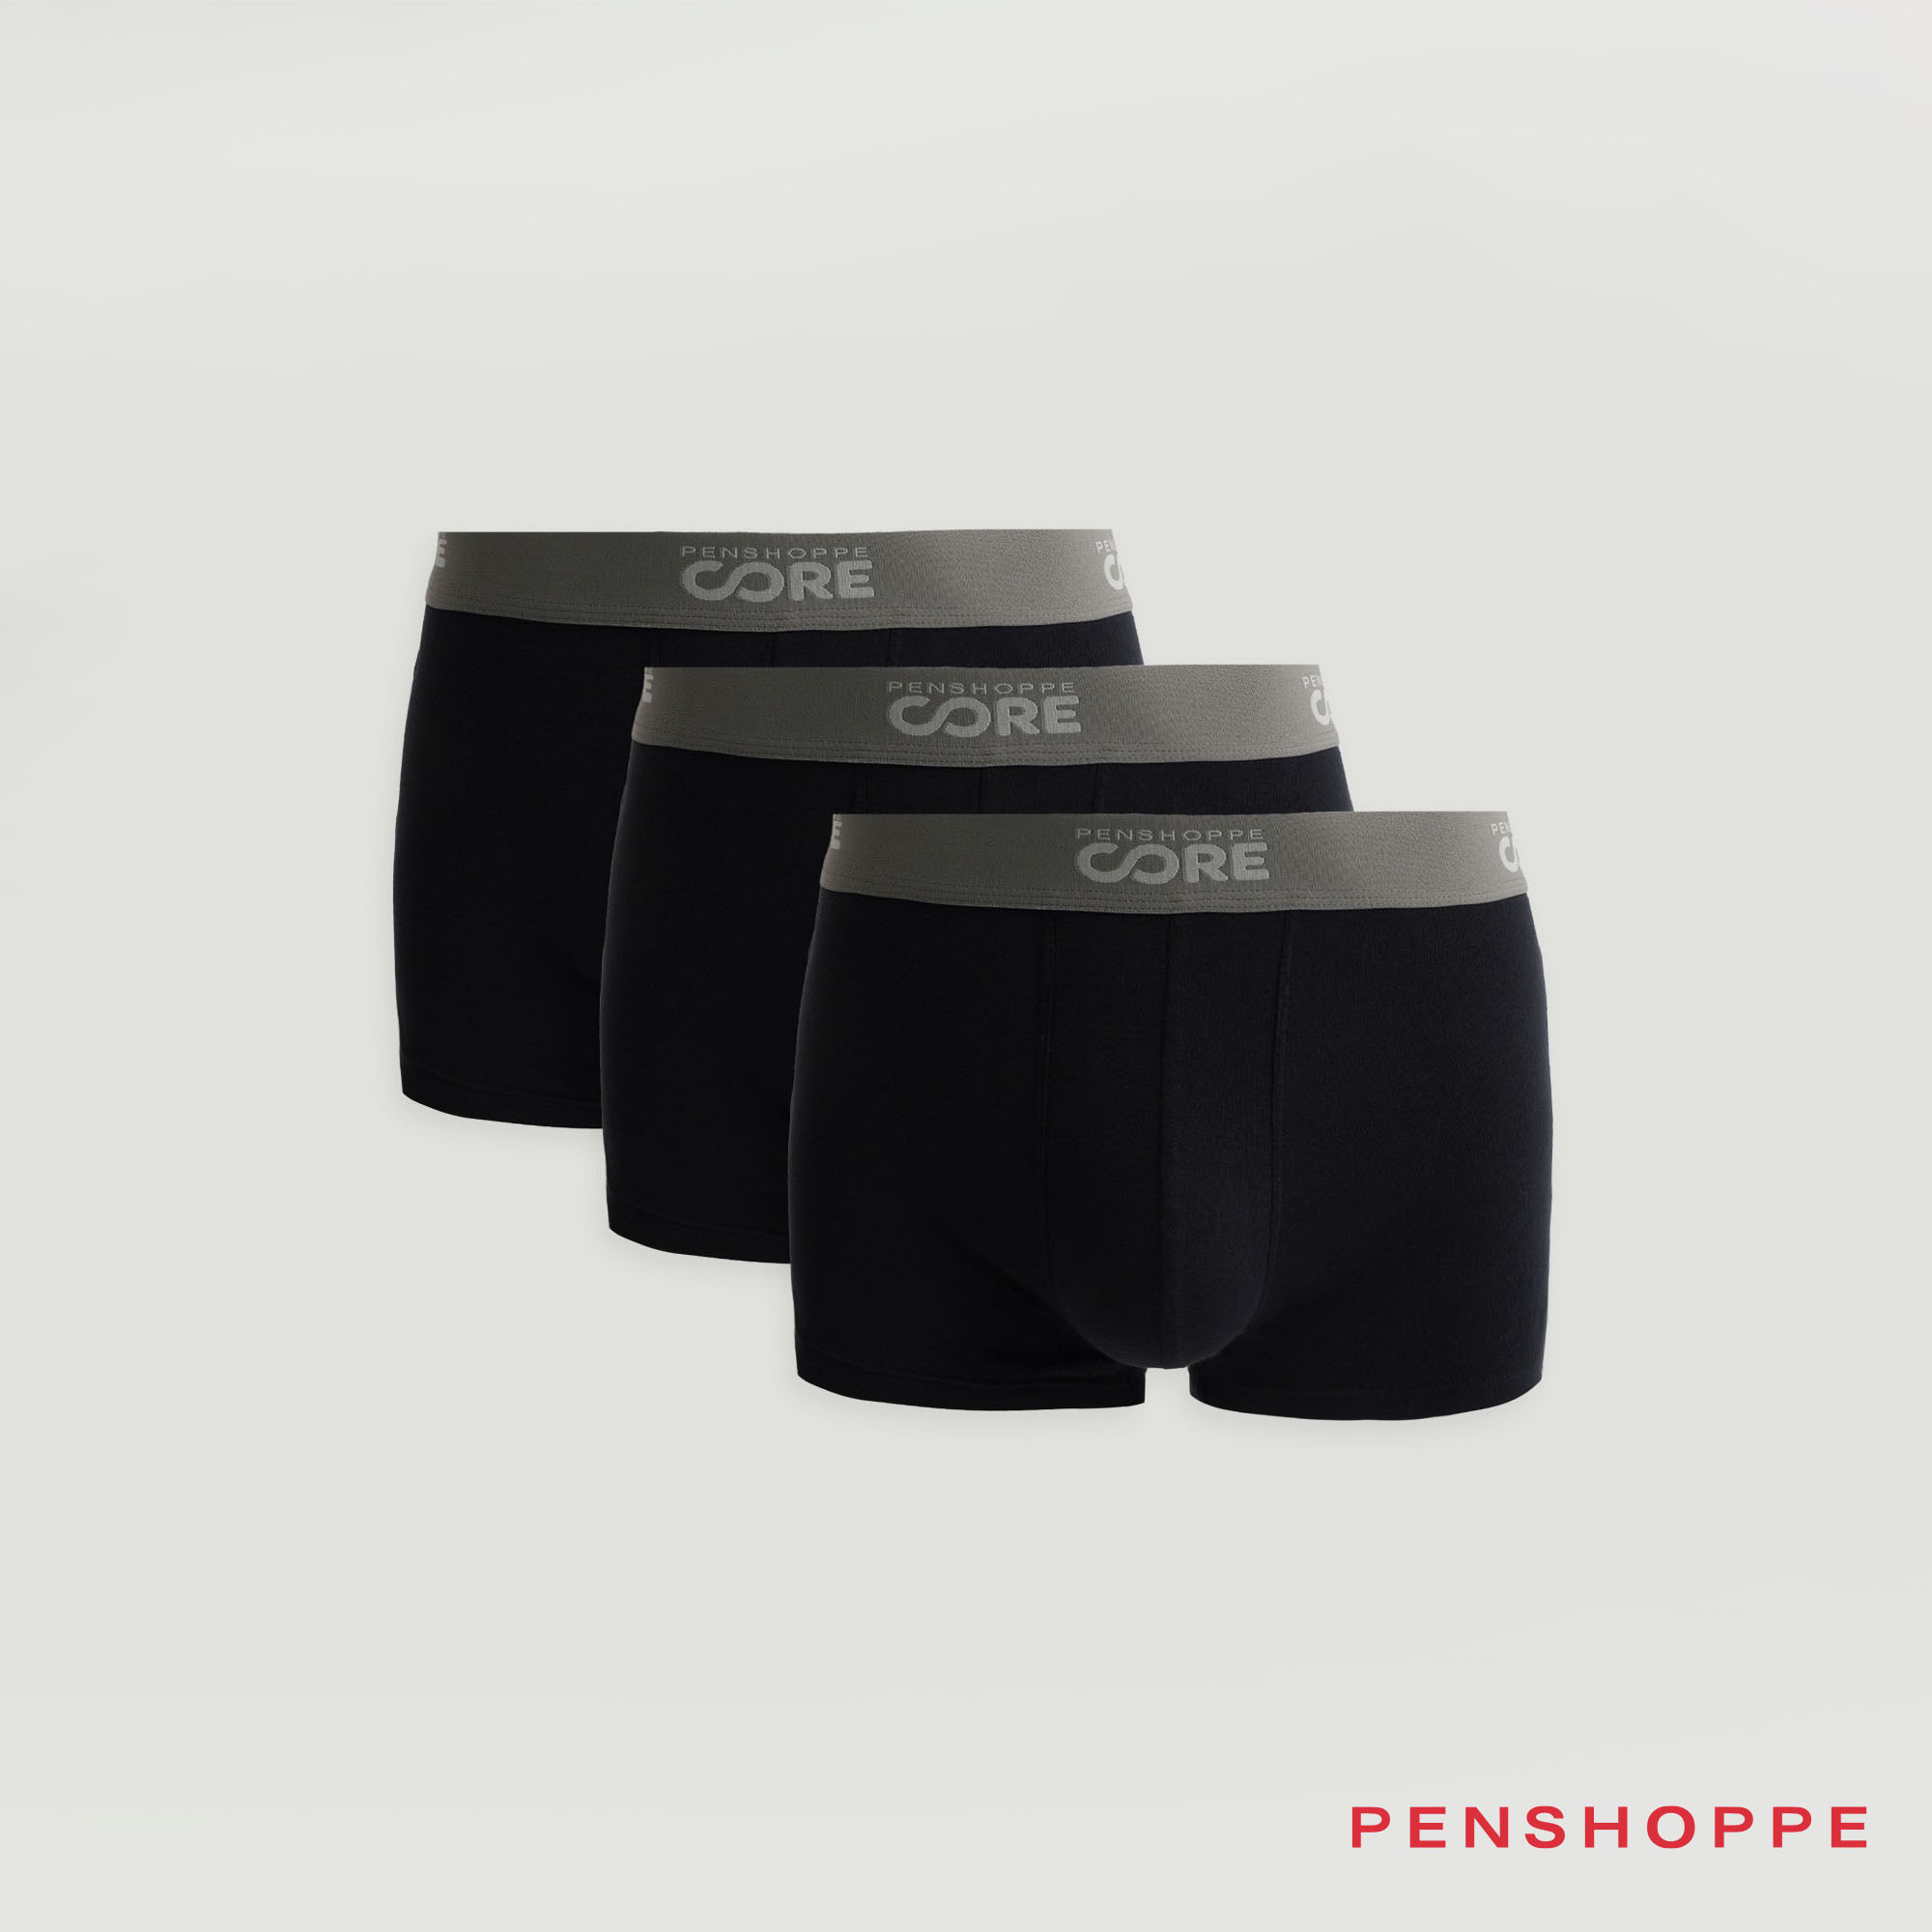 Penshoppe Core Classic Briefs For Men (Black/Charcoal/White